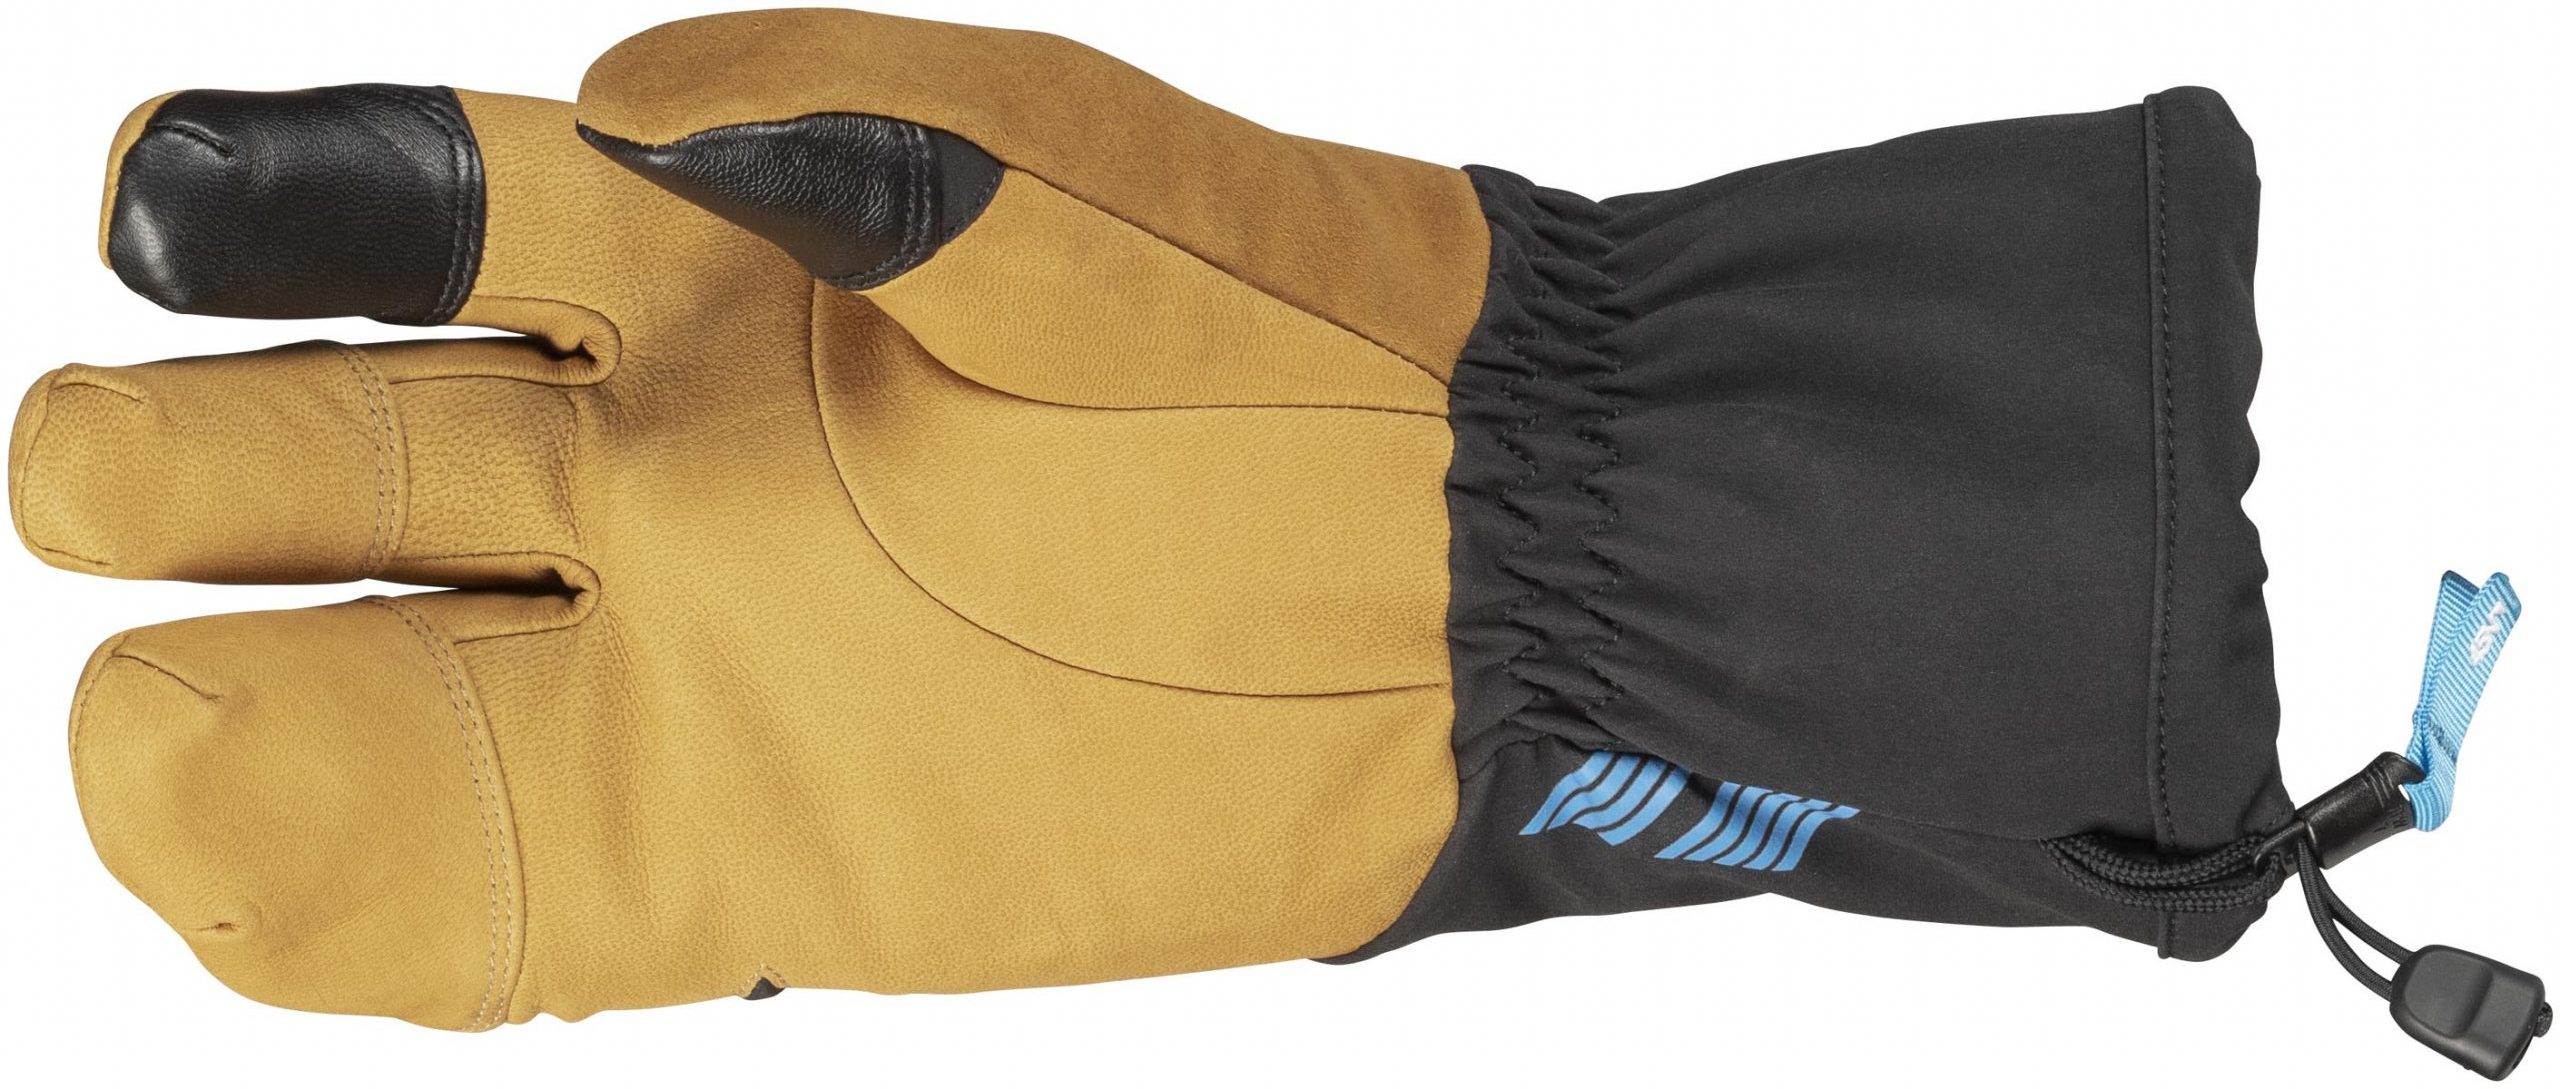 45NRTH Sturmfist winter gloves get new LTR Leather shell, plus 